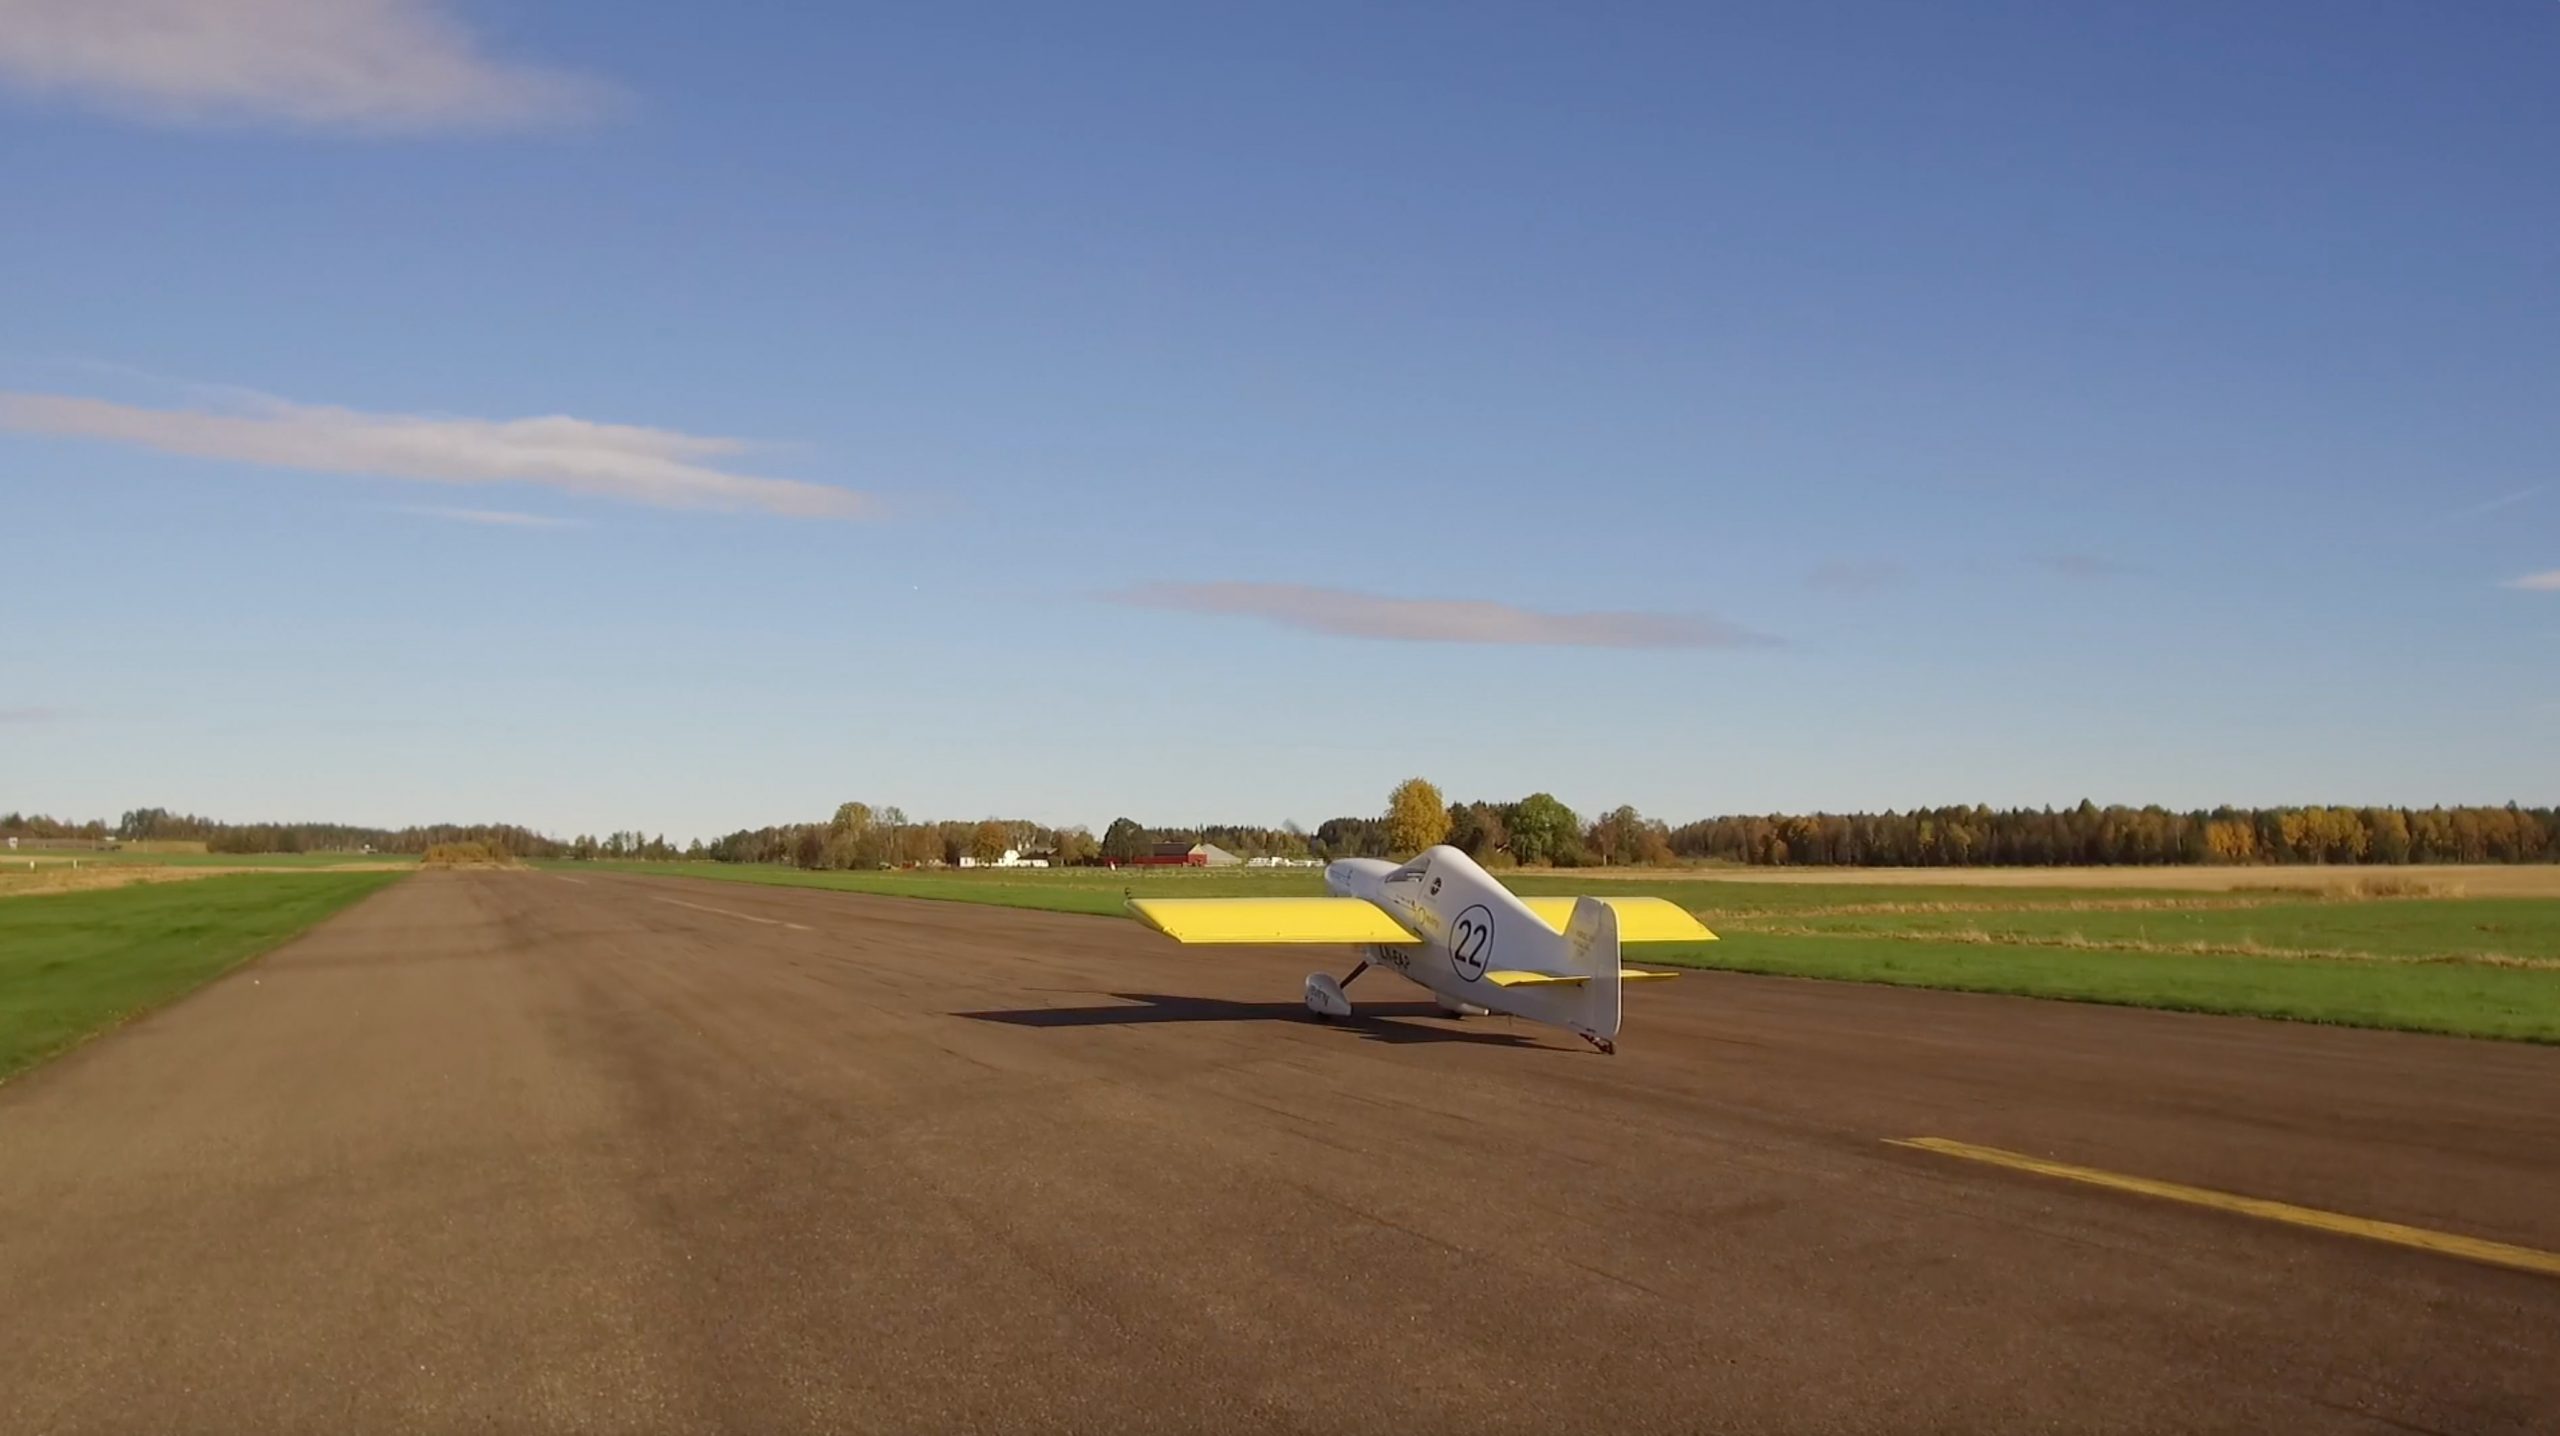 Nordic Air Racing Team ground testing